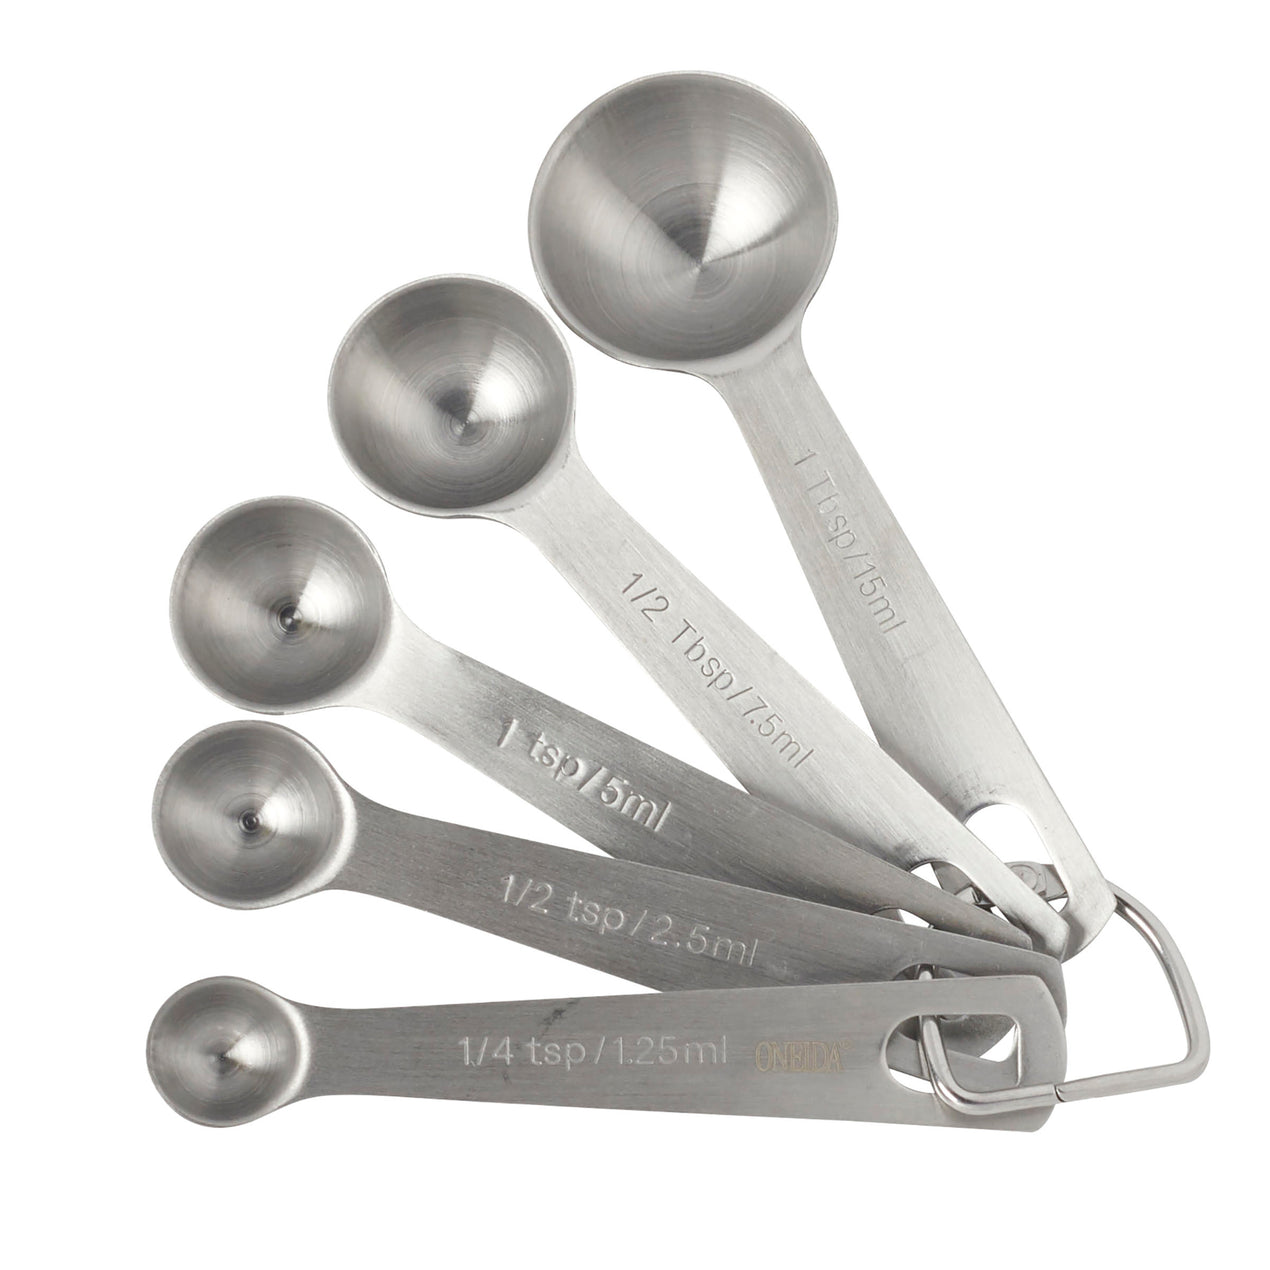 Metric Measuring Spoons (Set of 5)